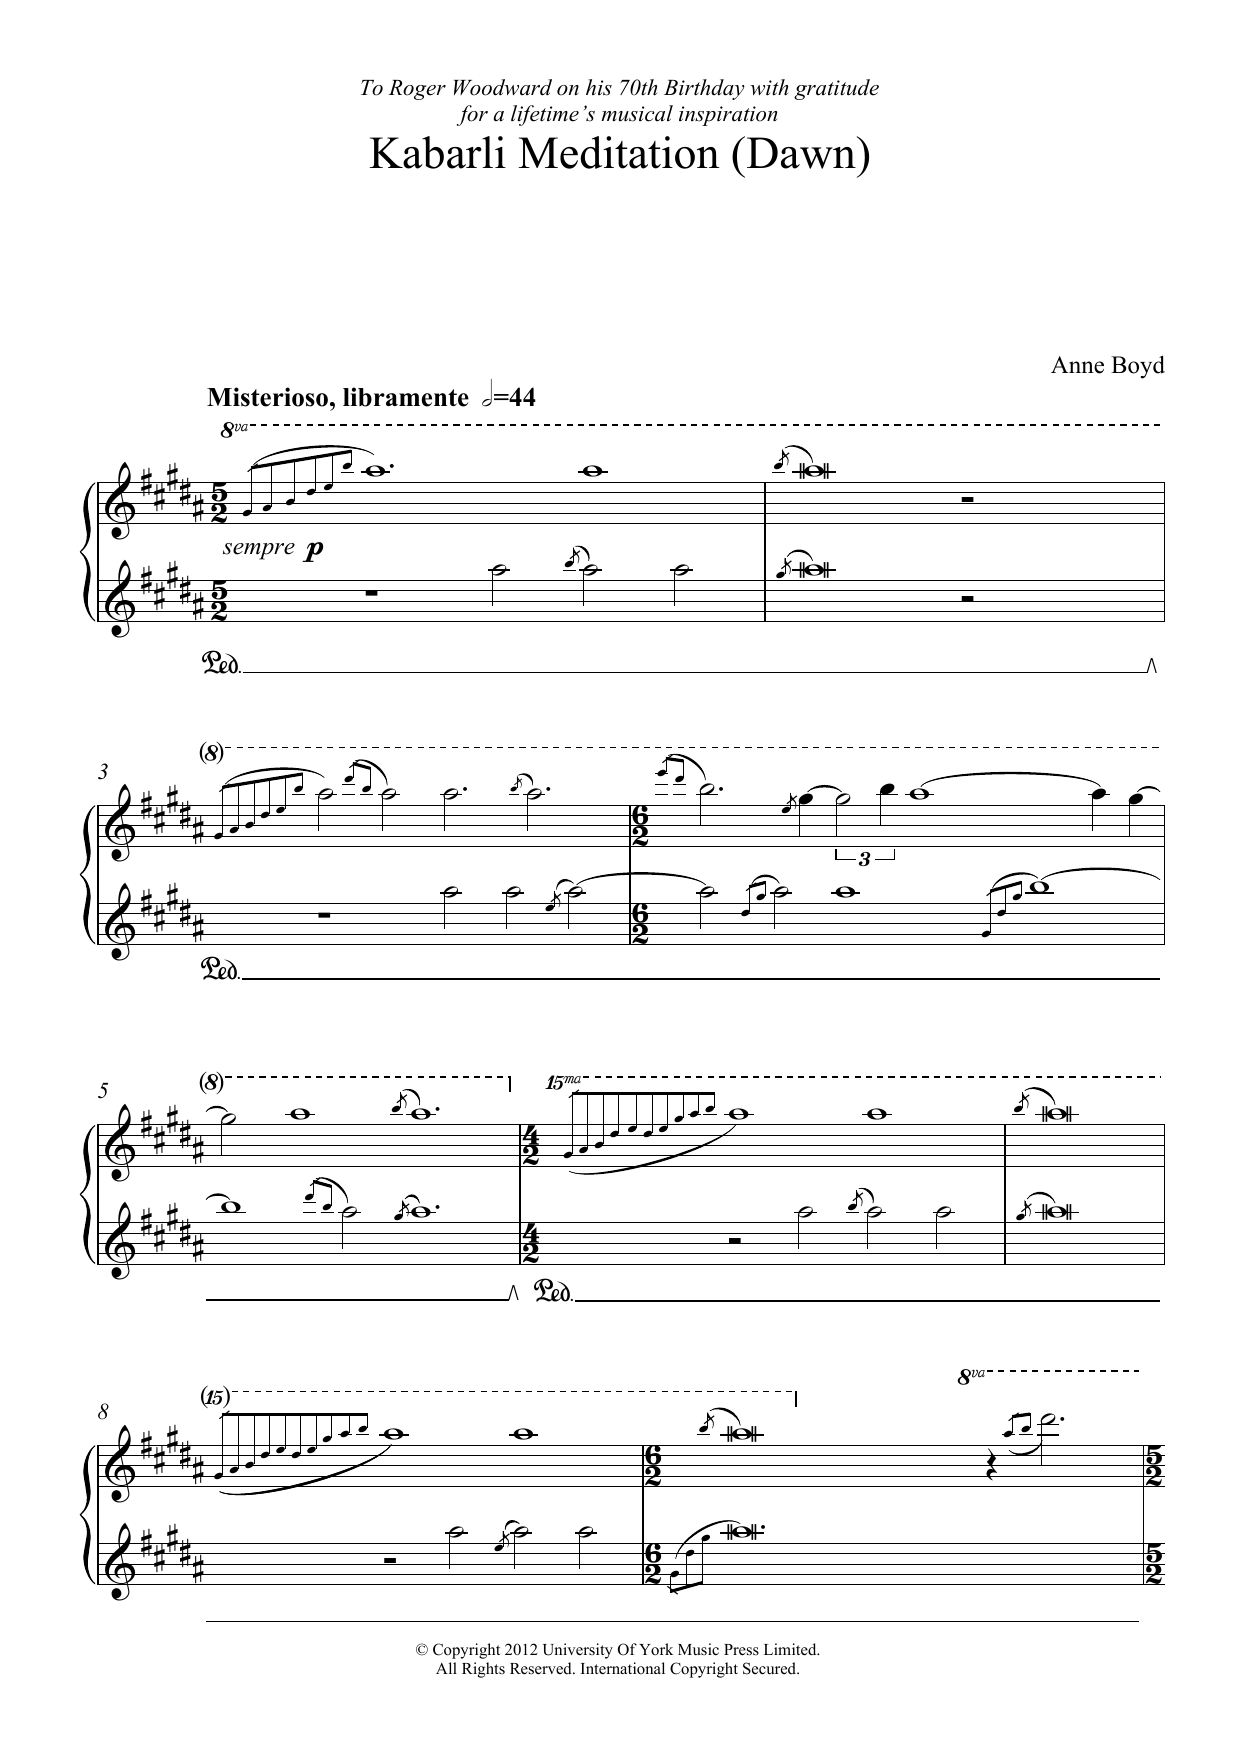 Anne Boyd Kabarli Meditation (Dawn) Sheet Music Notes & Chords for Piano - Download or Print PDF